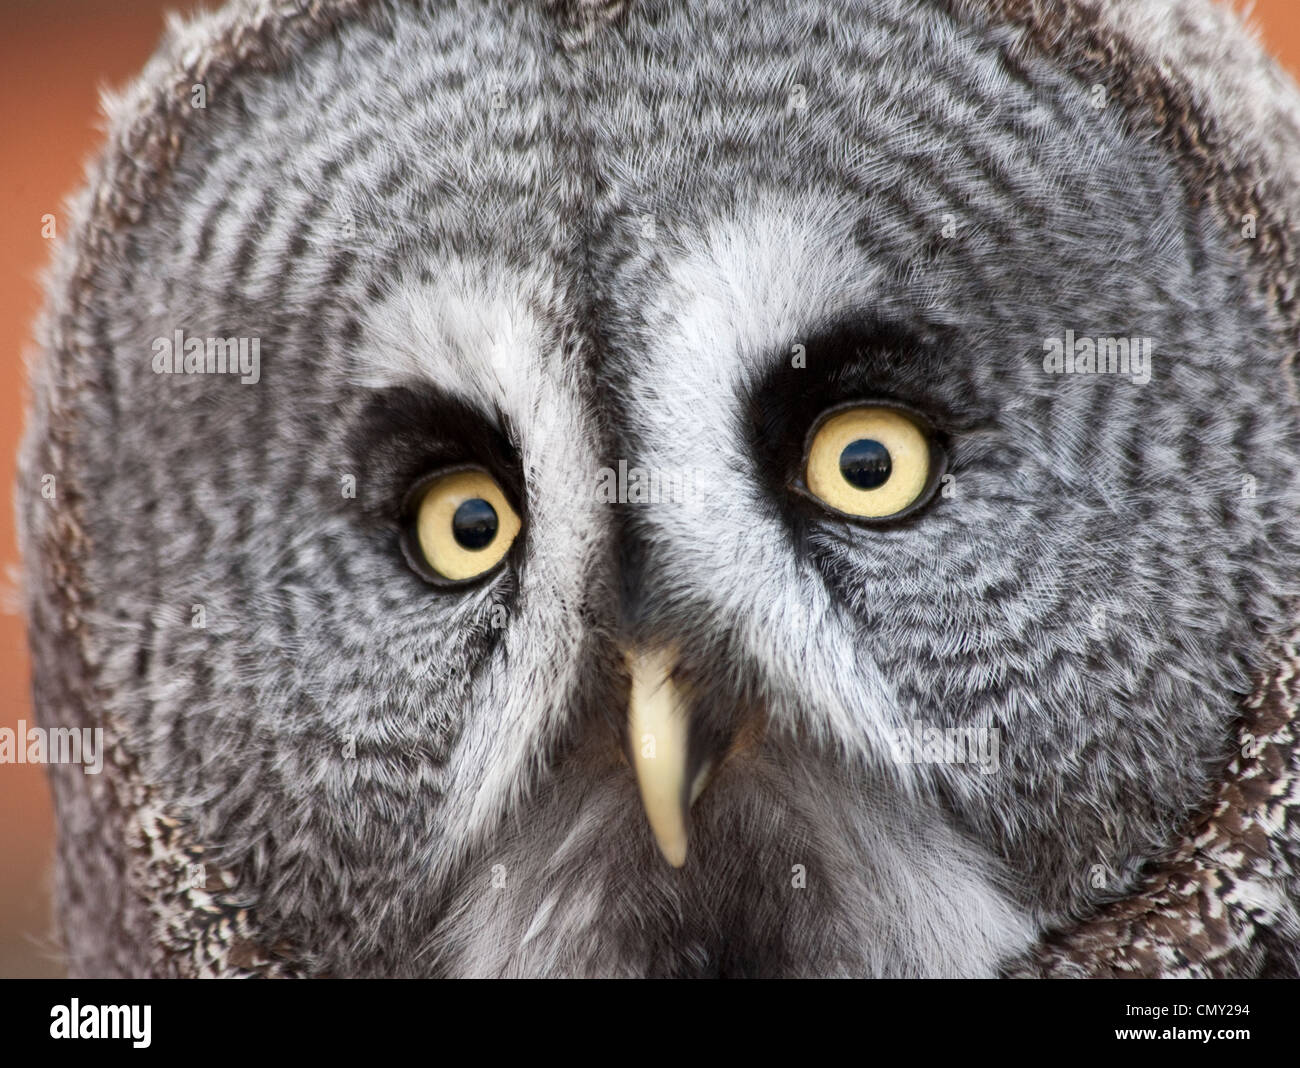 Great Grey owl face Stock Photo